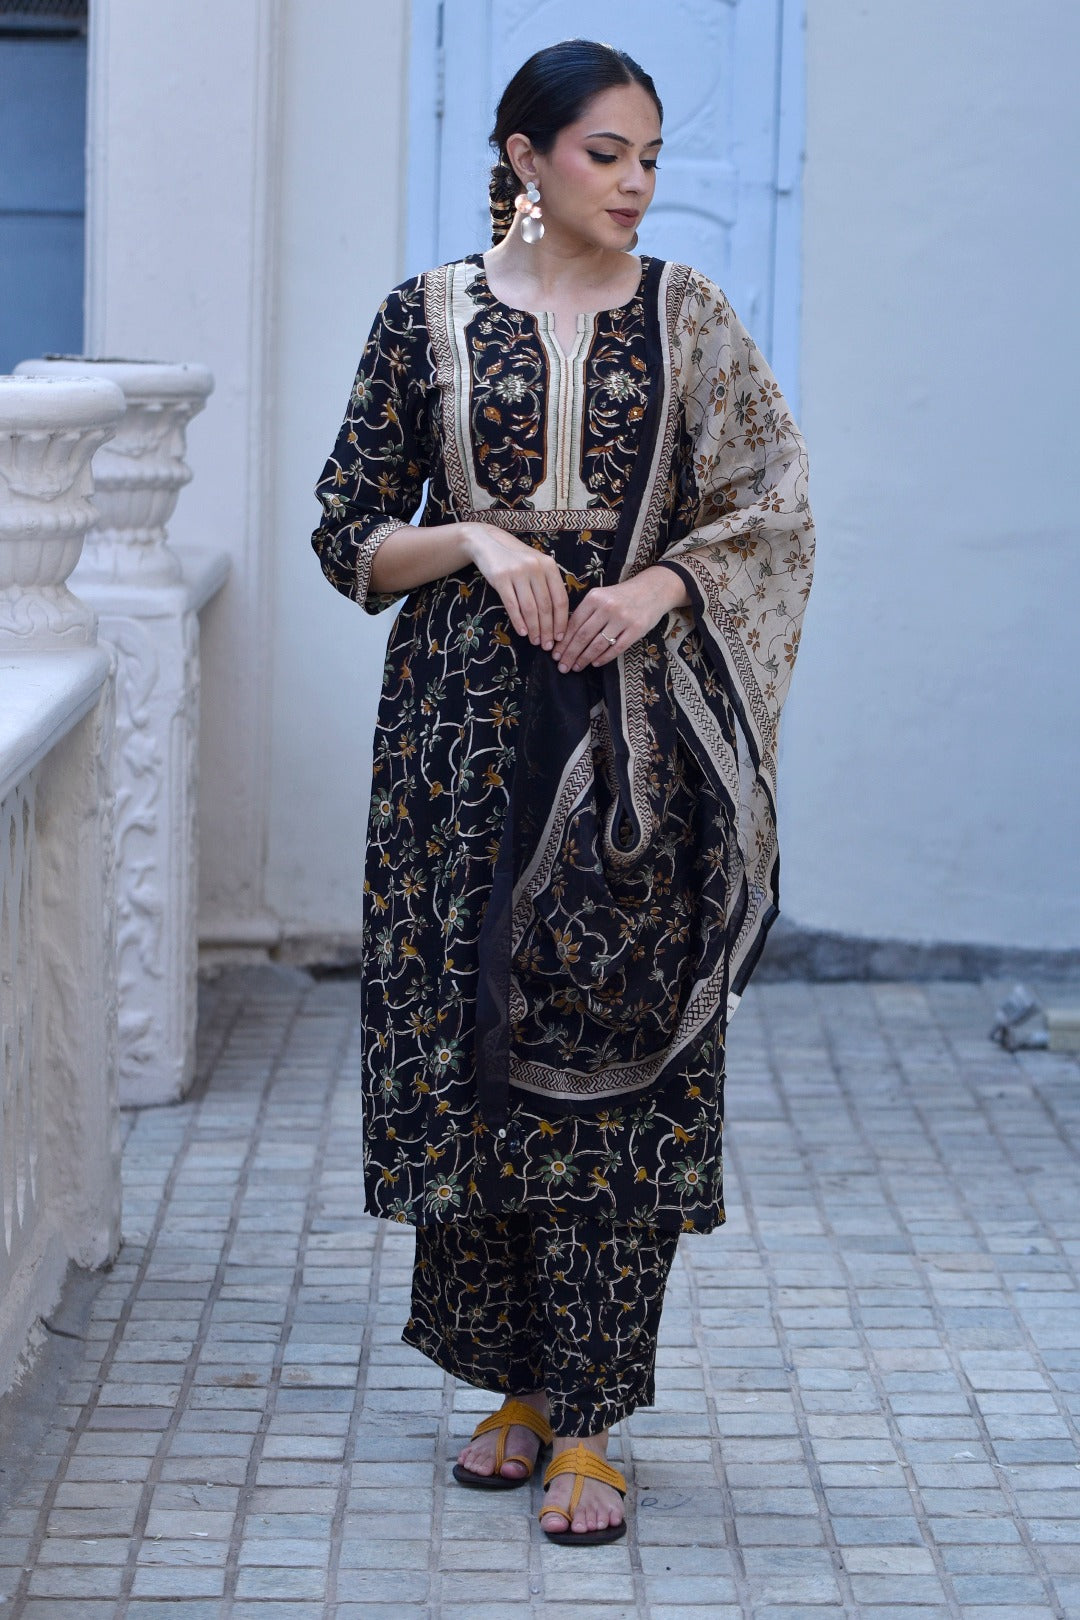 Women Ethnic Wear- Explore Stylish Festive Tops and Printed Kurtas